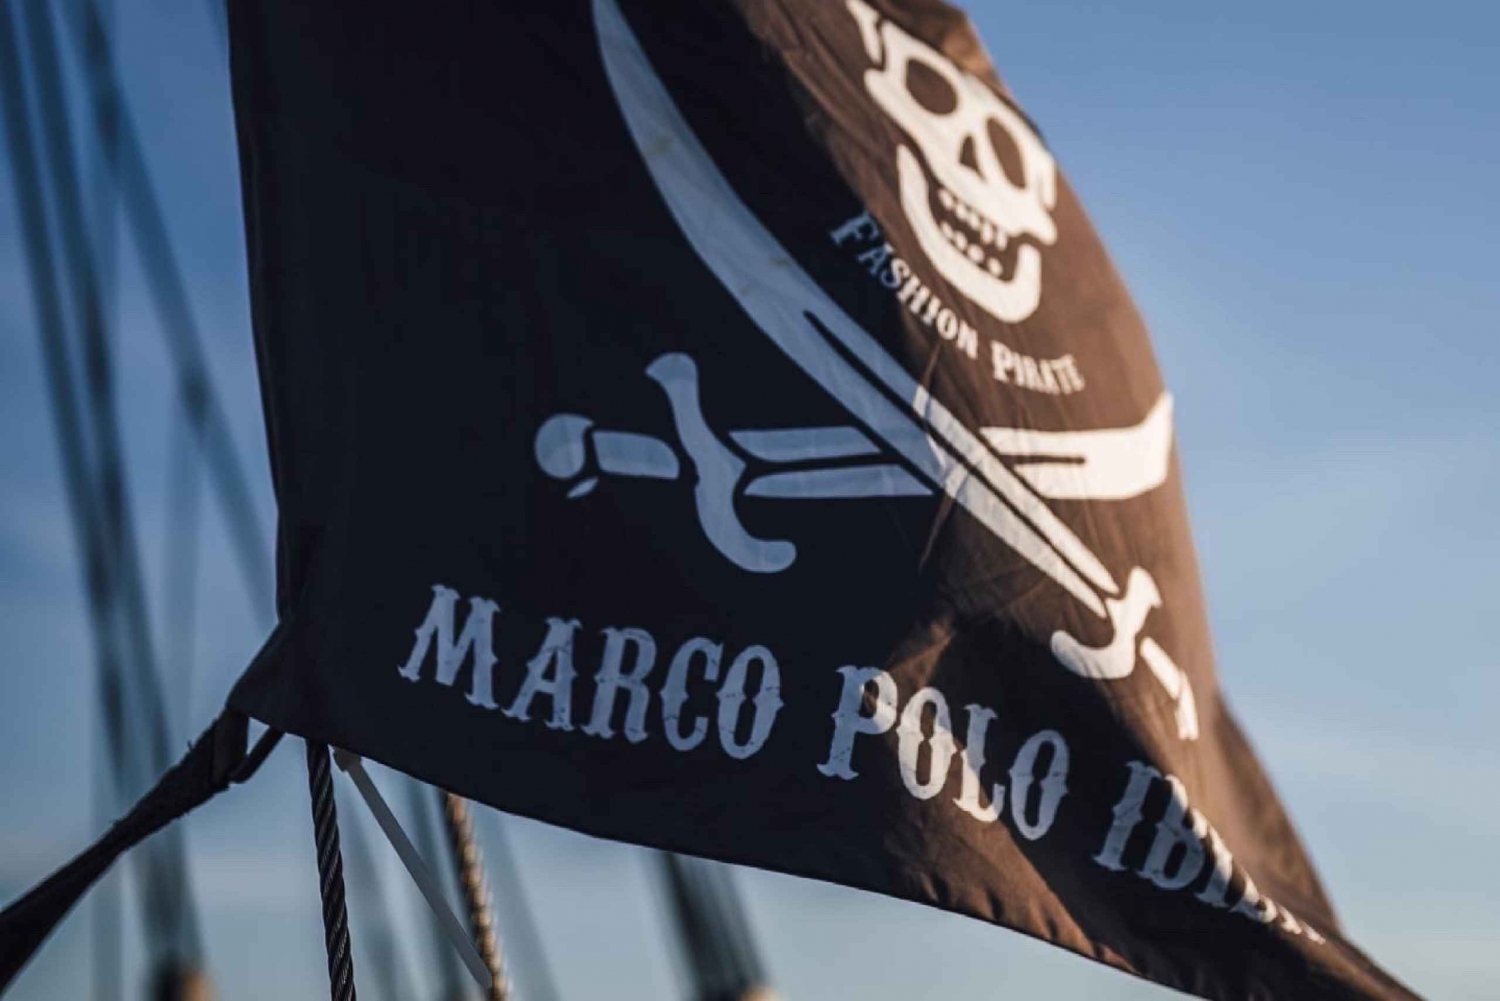 Ibiza: Pirate Sailing Cruise to Formentera